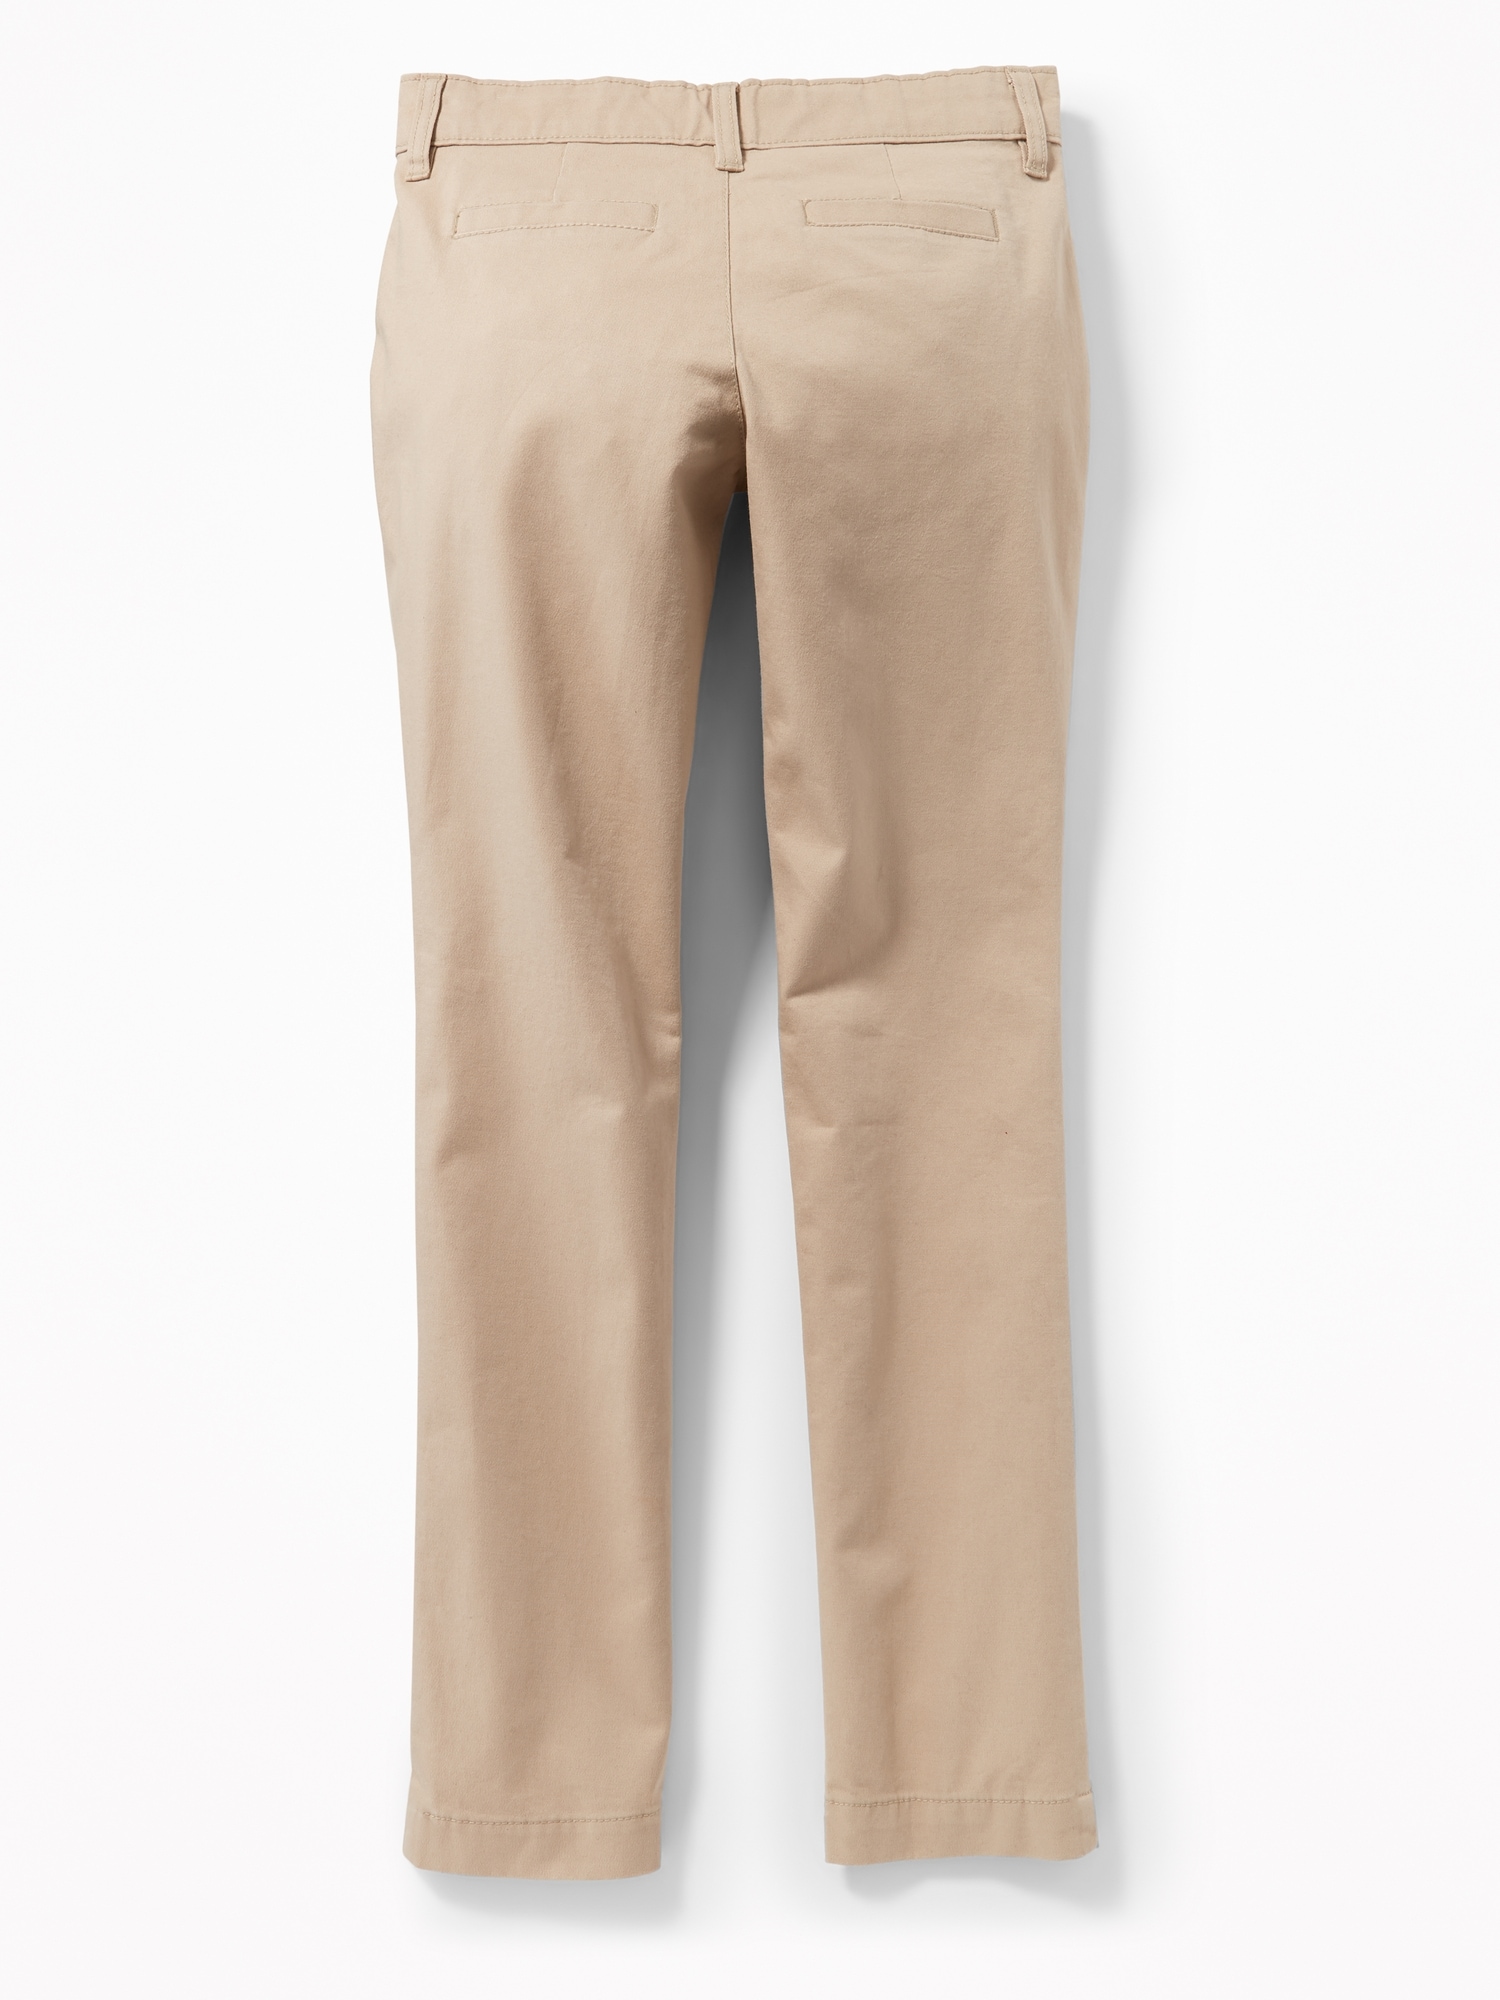 Ttn Wholesale Low Price Grey School Uniform Pants for Girls  China Grey School  Pants for Girls and Grey School Pants price  MadeinChinacom